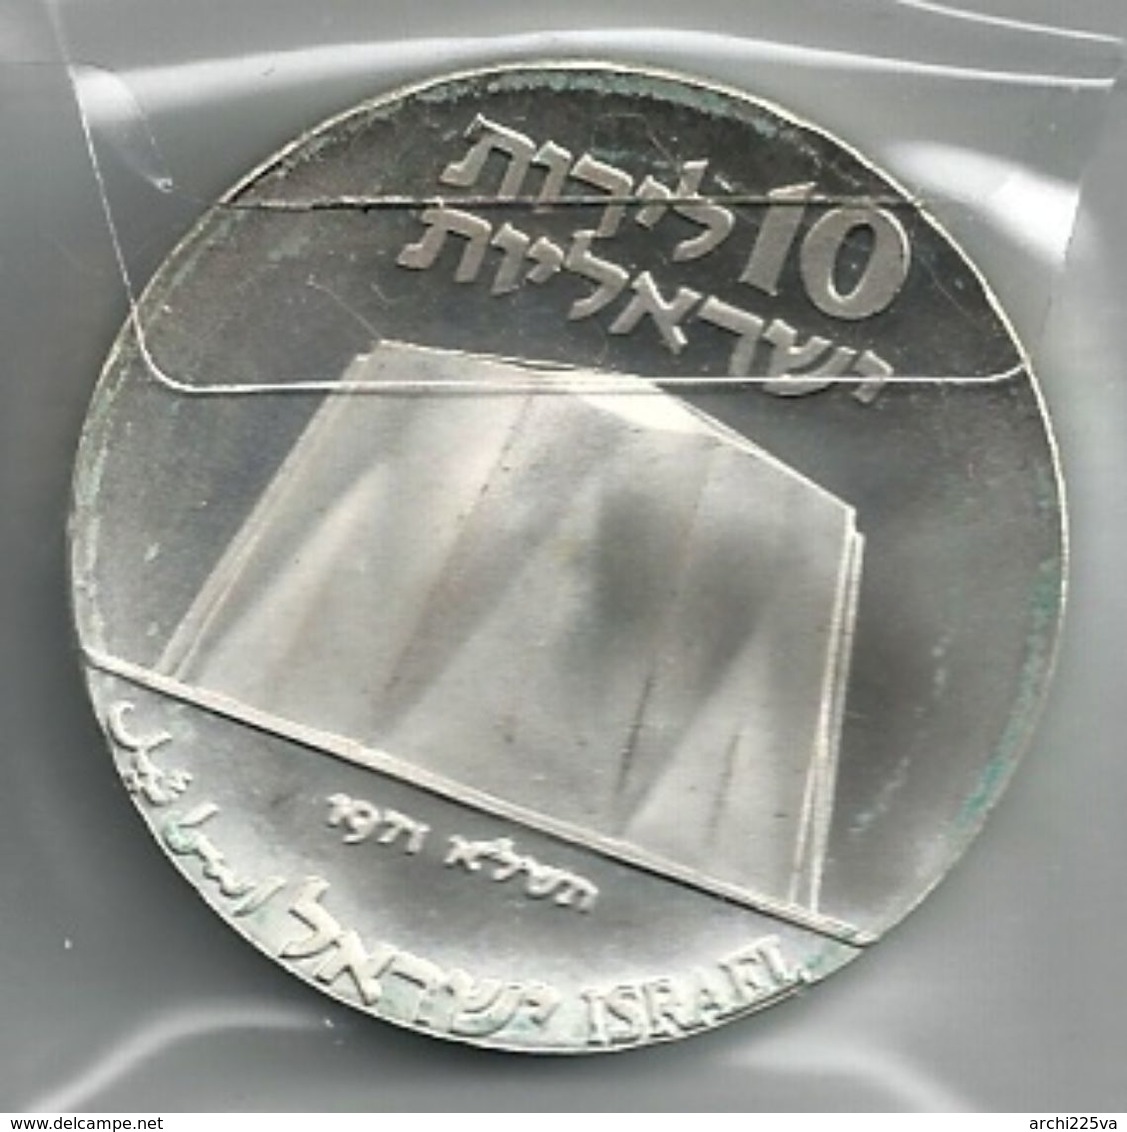 ISRAELE 1971 - 10 IL. SPL / FDC Proof - Argento / Argent / Silver 900 / 000 - Bustina Semplice - Israele